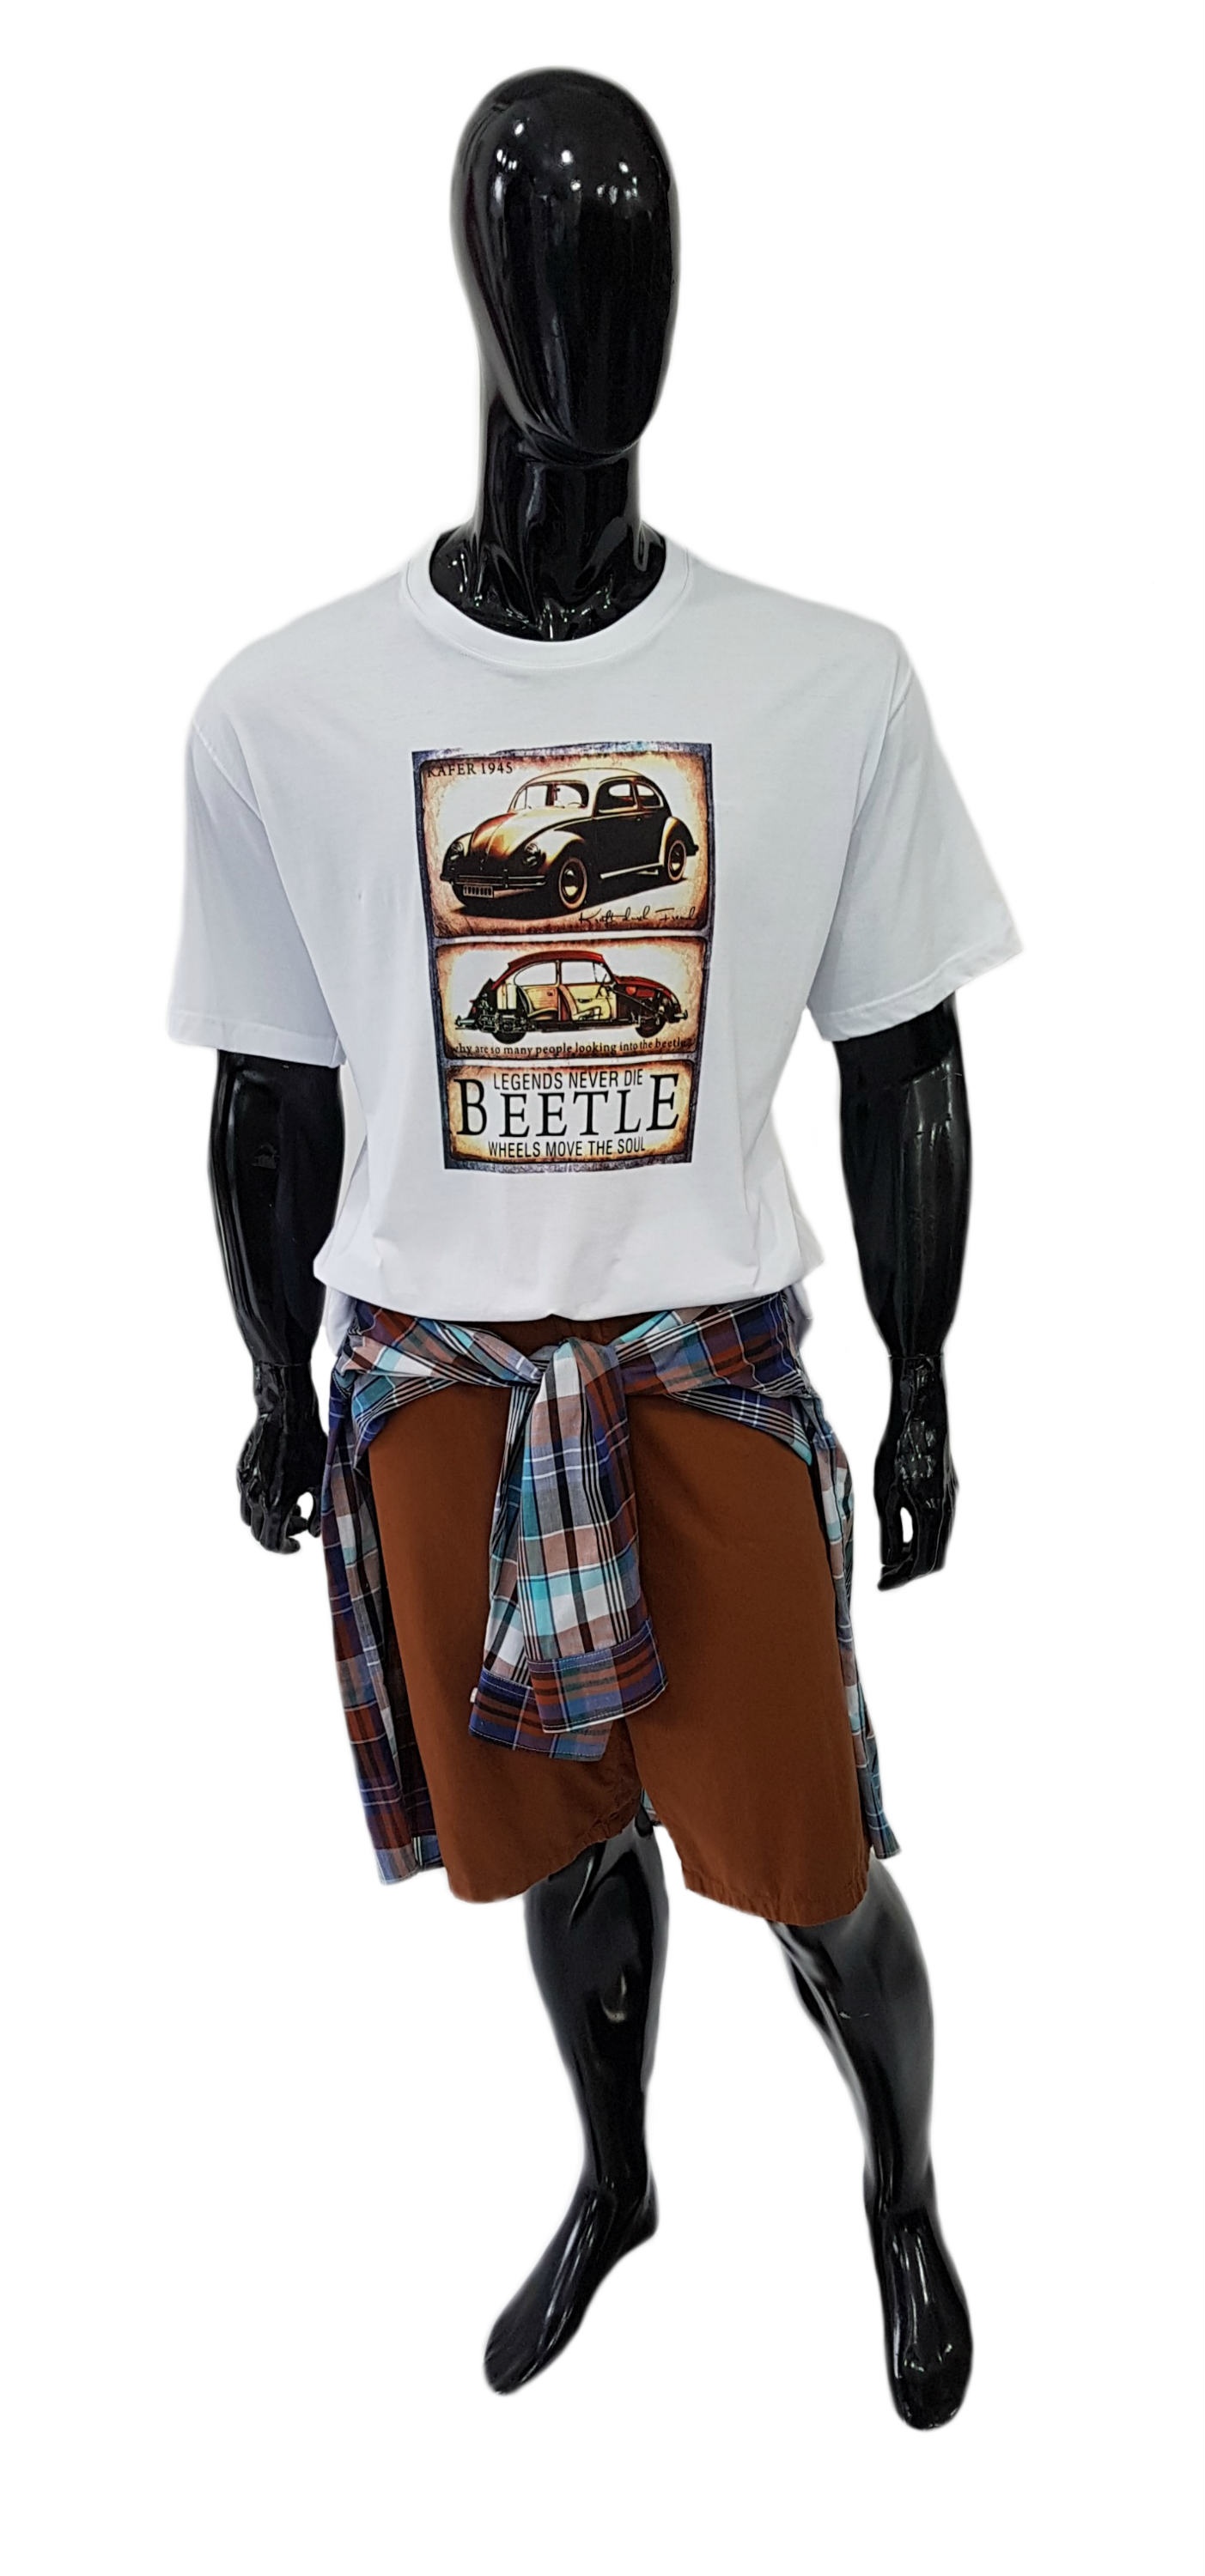 Camiseta Plus Size Beetle Ref 02906 / Bermuda Plus Size Sarja Ref 01910 / Camisa Xadrez Ref 03049